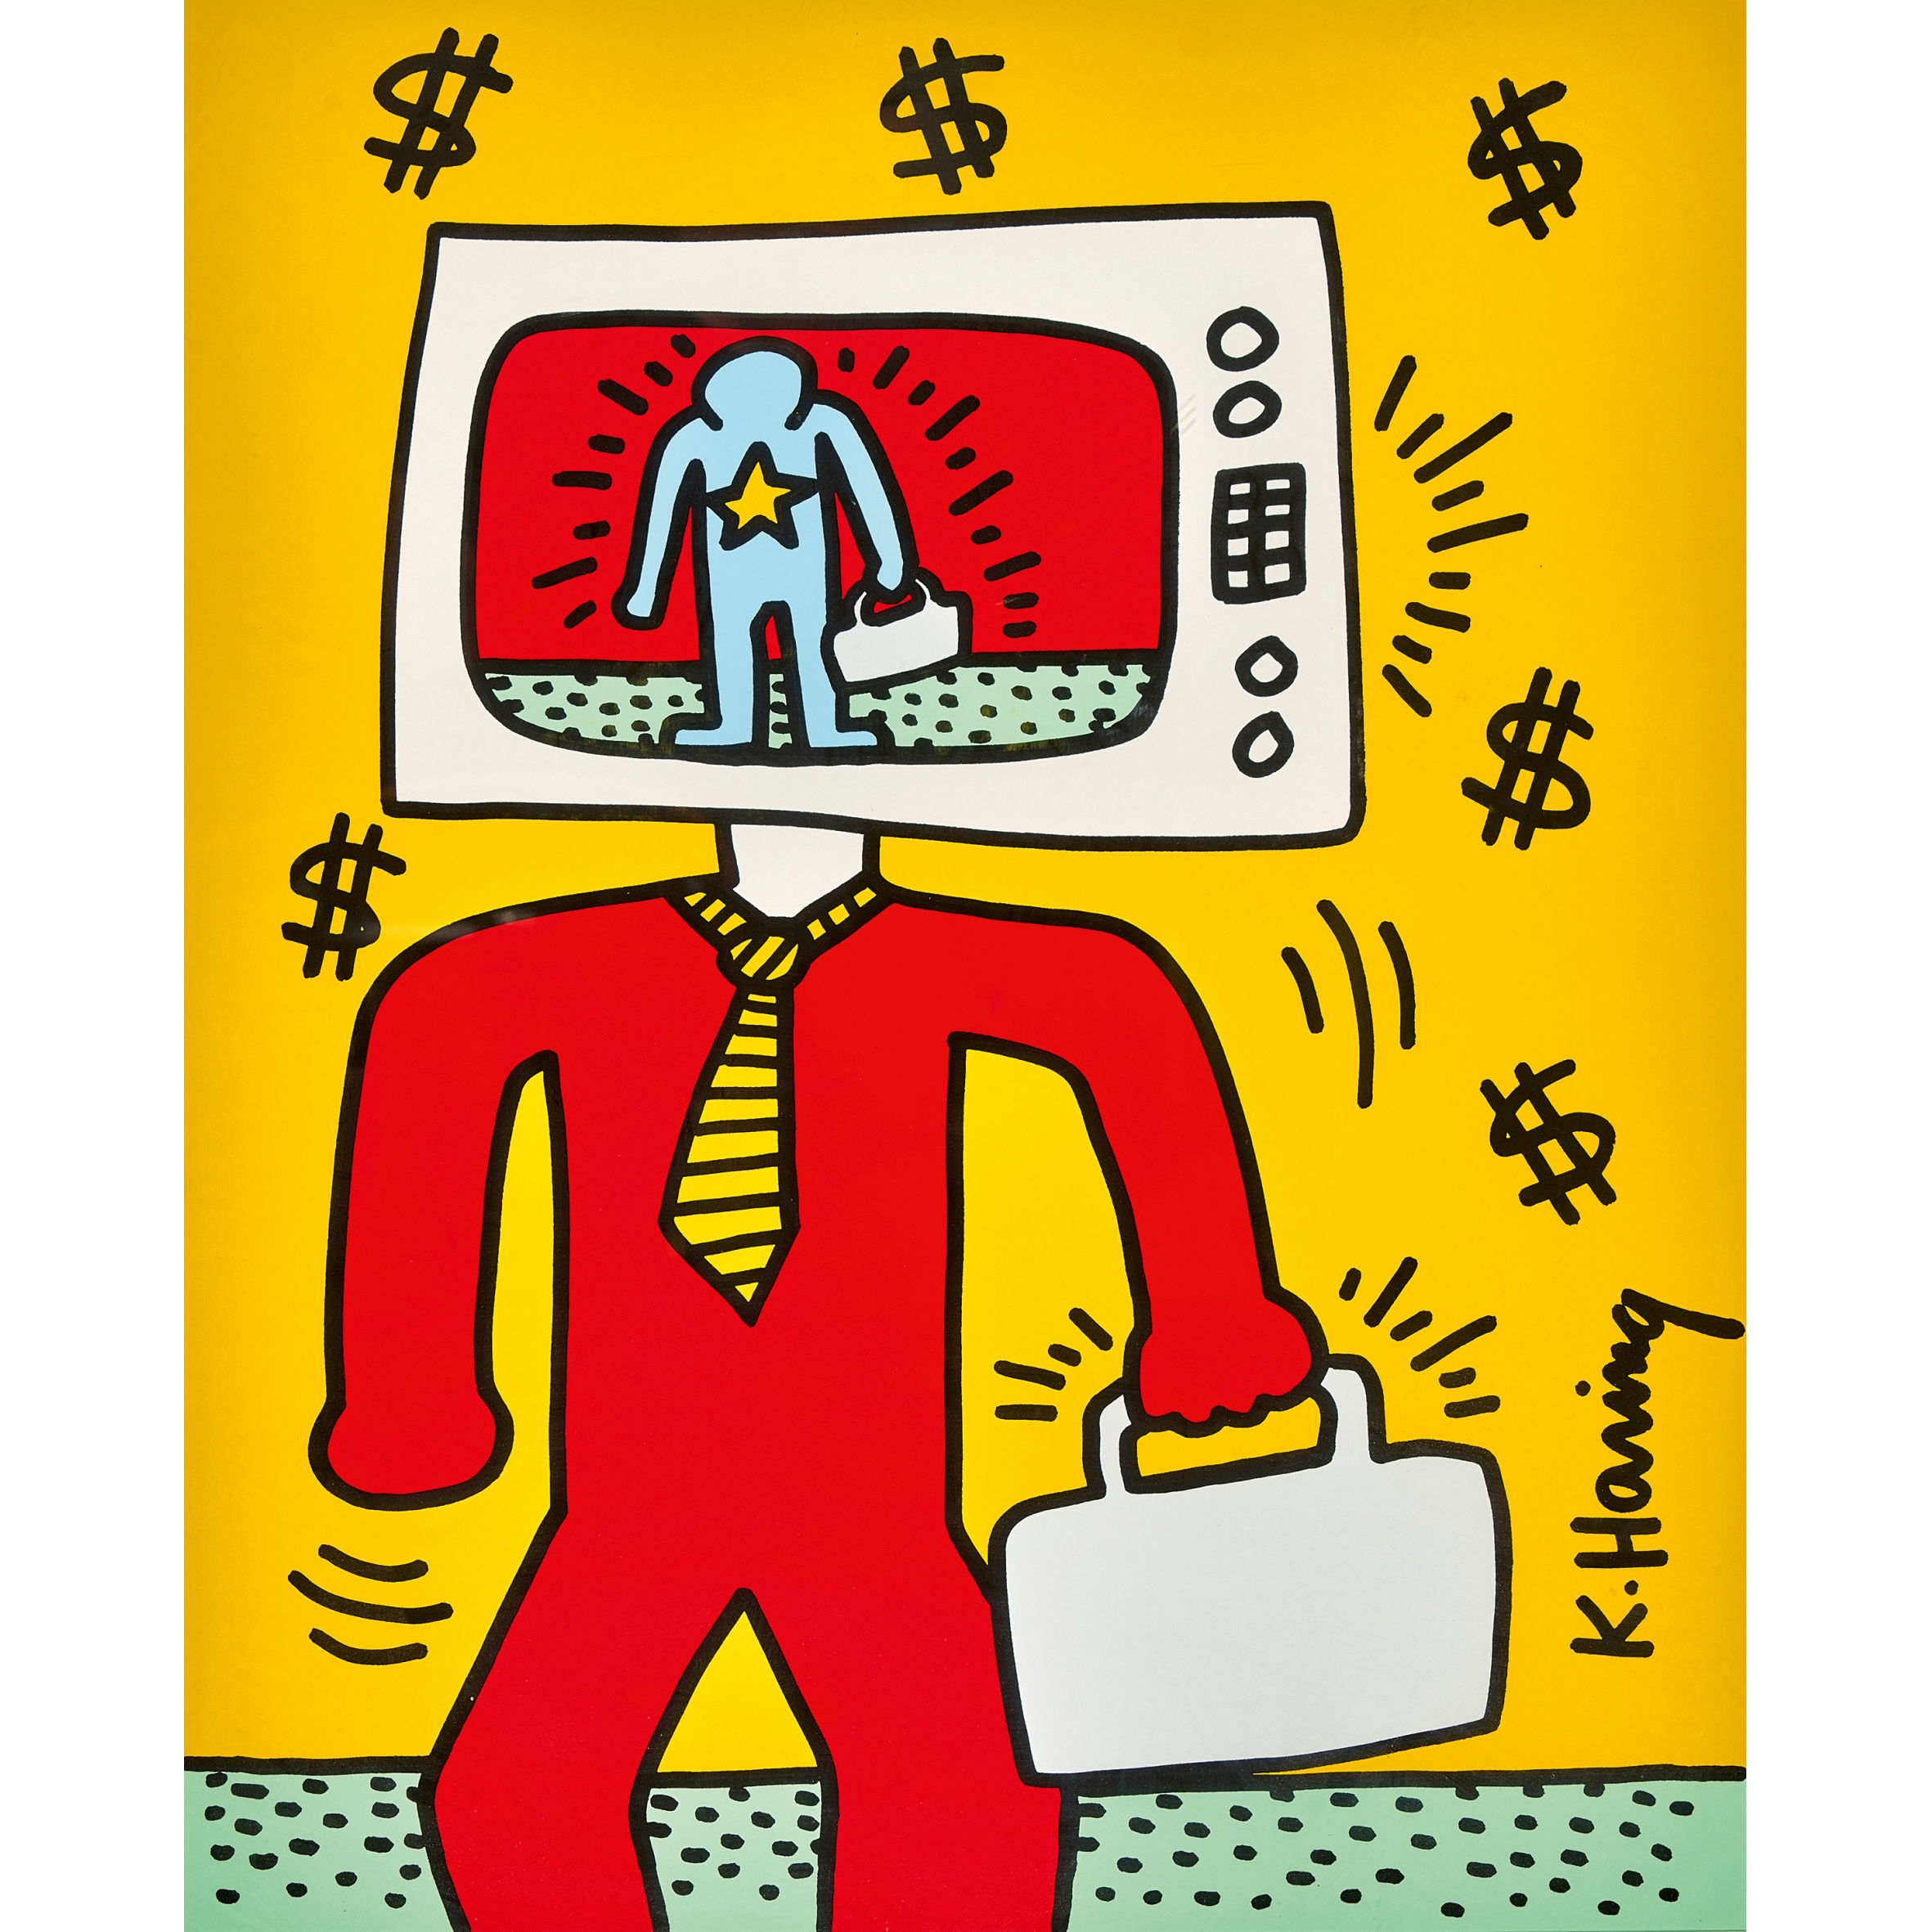 Artwork by Keith Haring, TV man, Made of color silkscreen